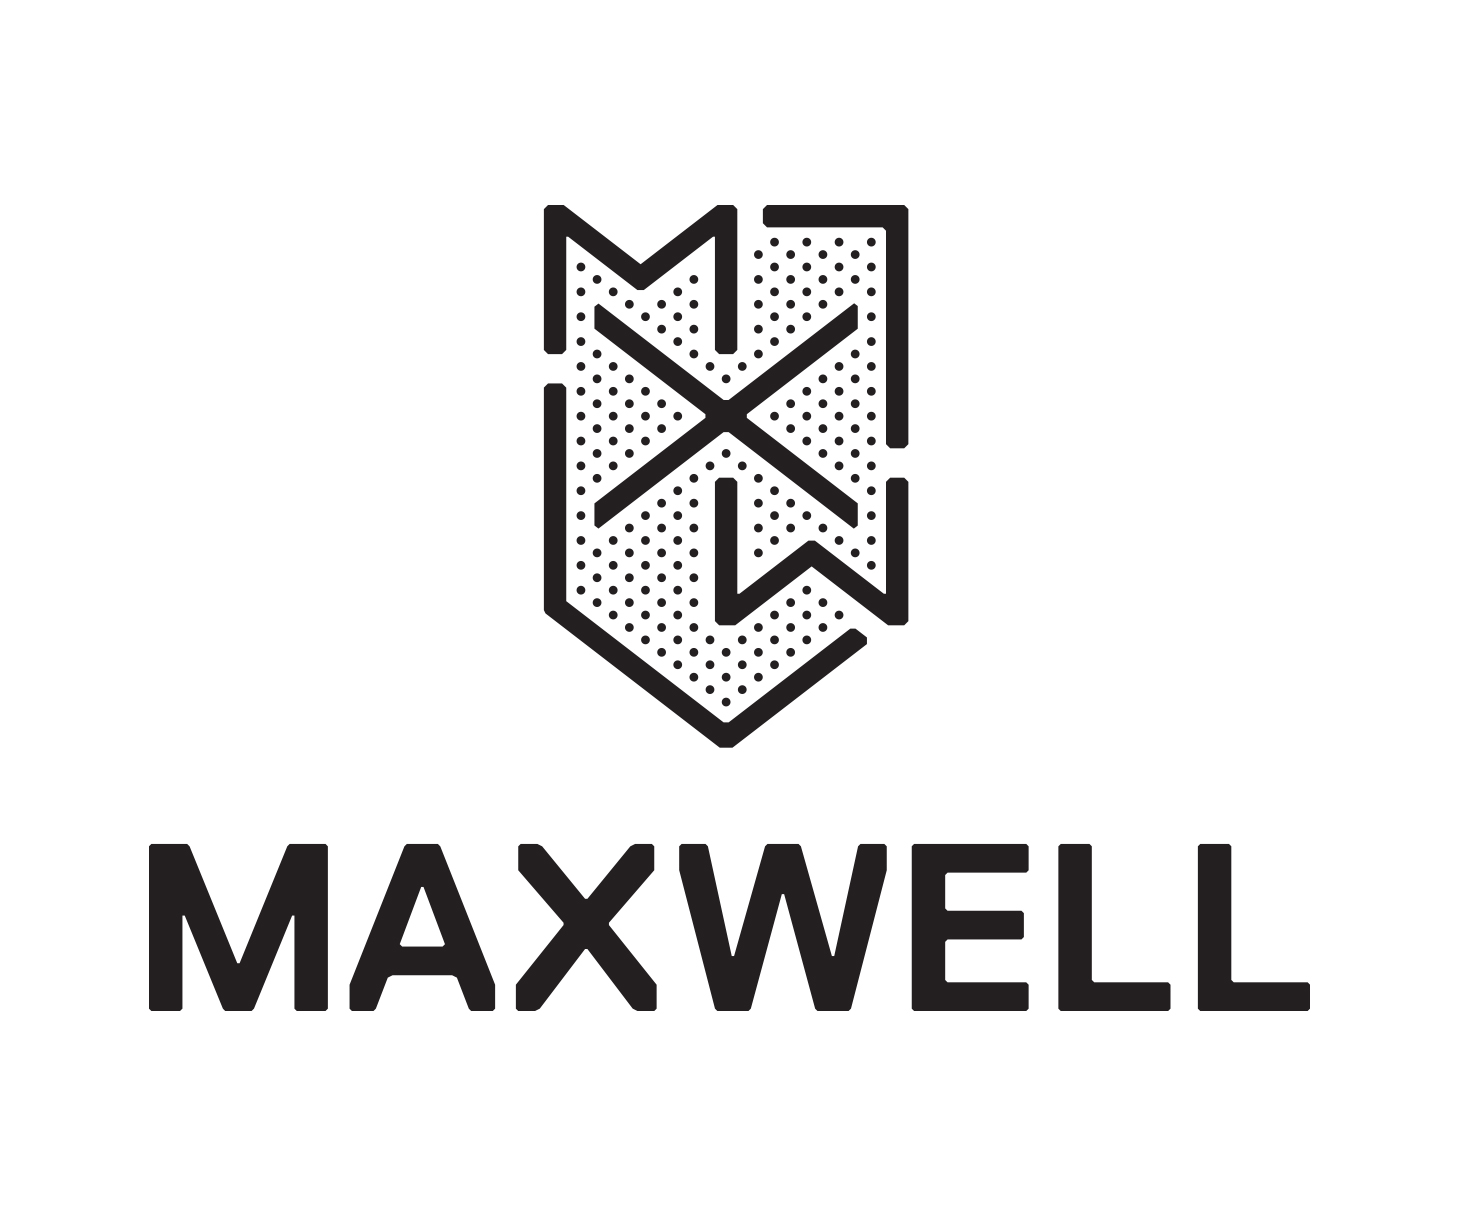 Maxwell Wines logo